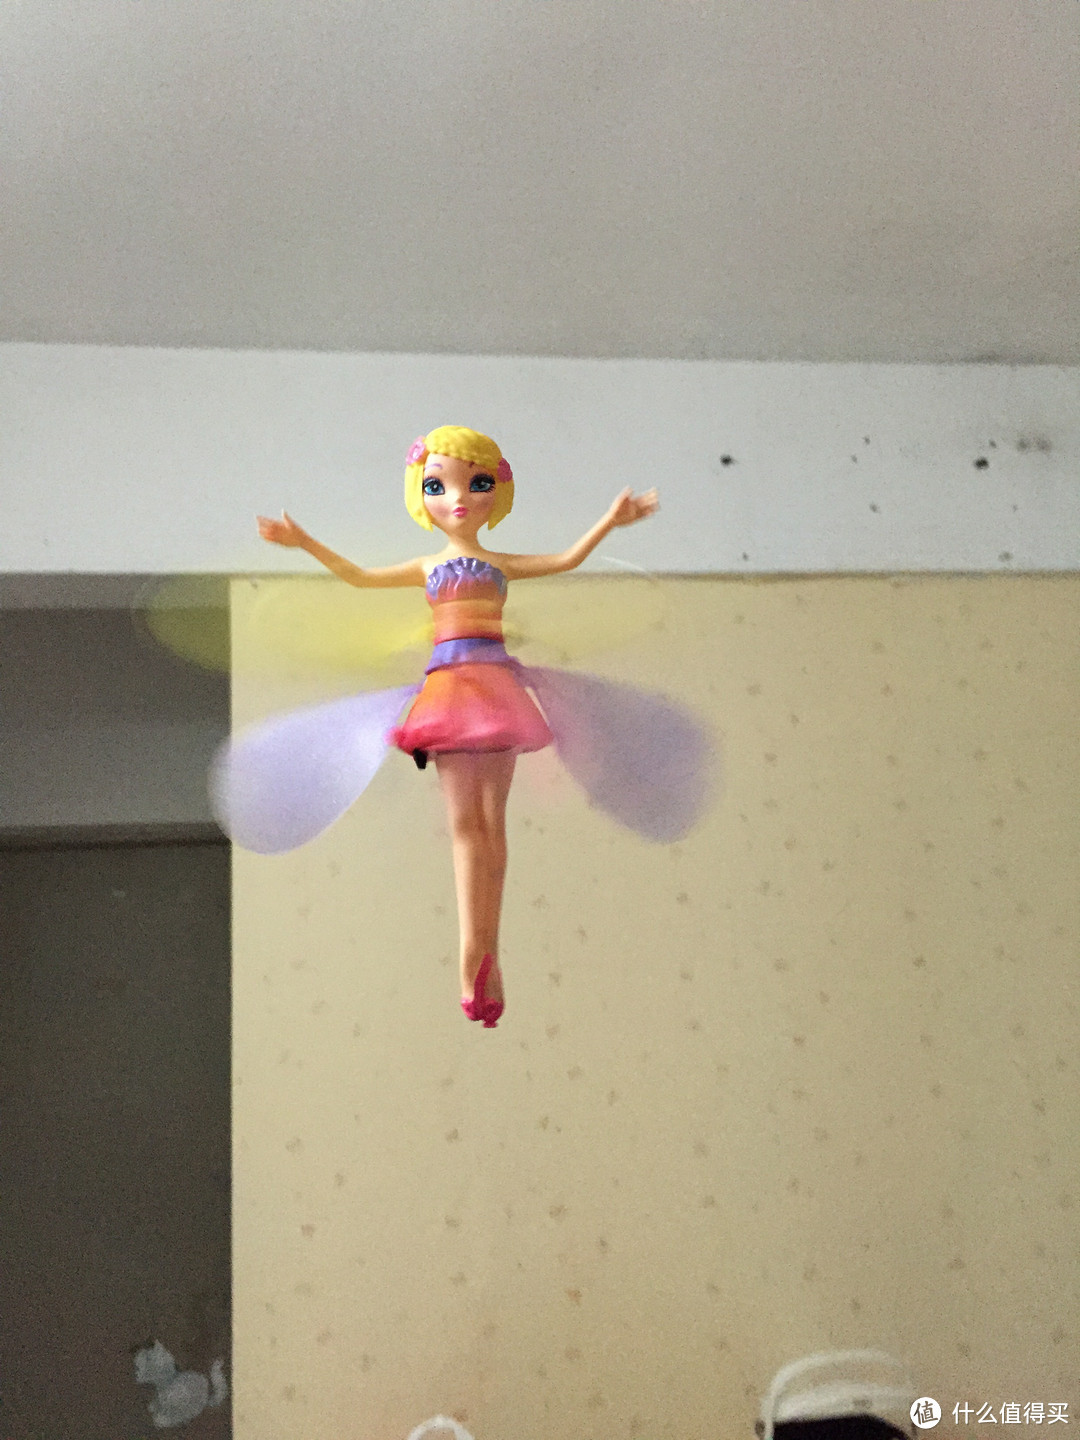 飞天小仙女：Flutterbye Flying Fairies 飞行玩具